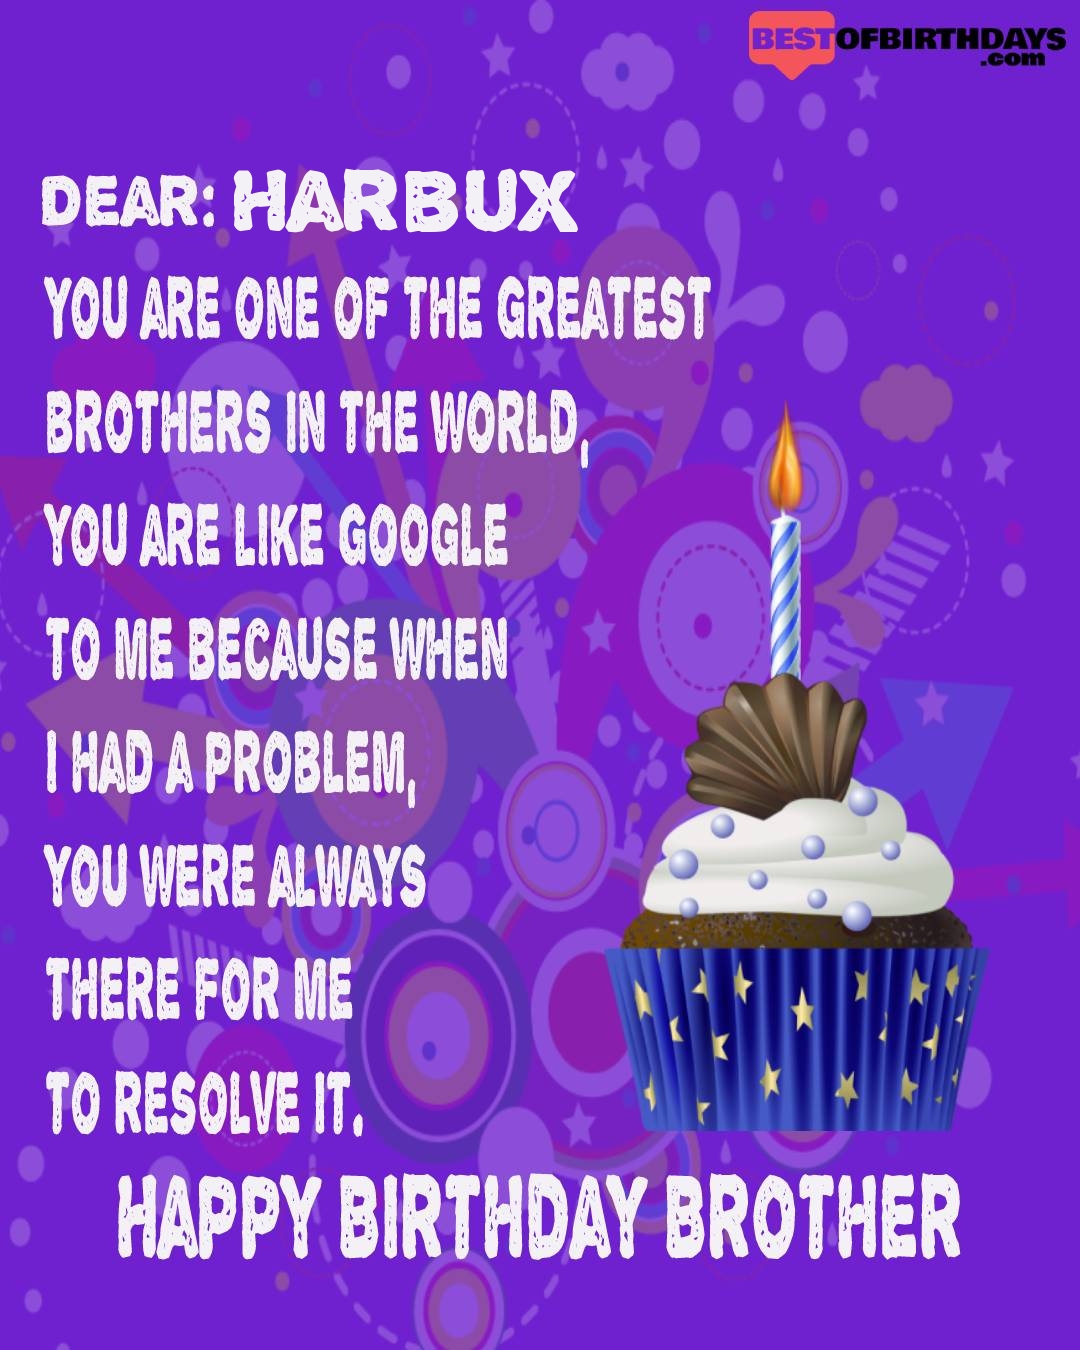 Happy birthday harbux bhai brother bro